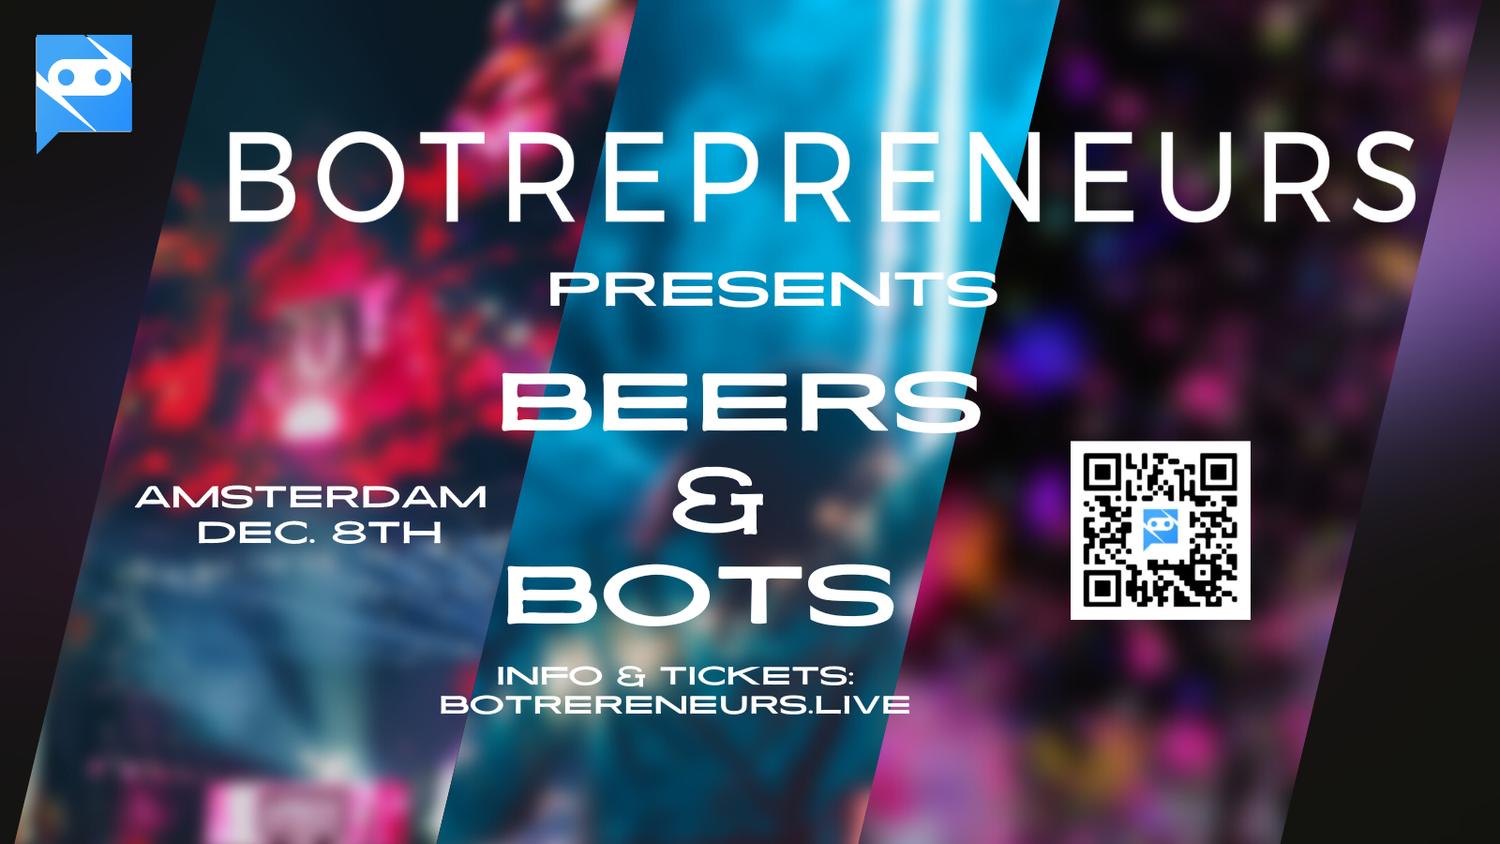 Botrepreneurs Networking Event - Amsterdam - Dec. 8th